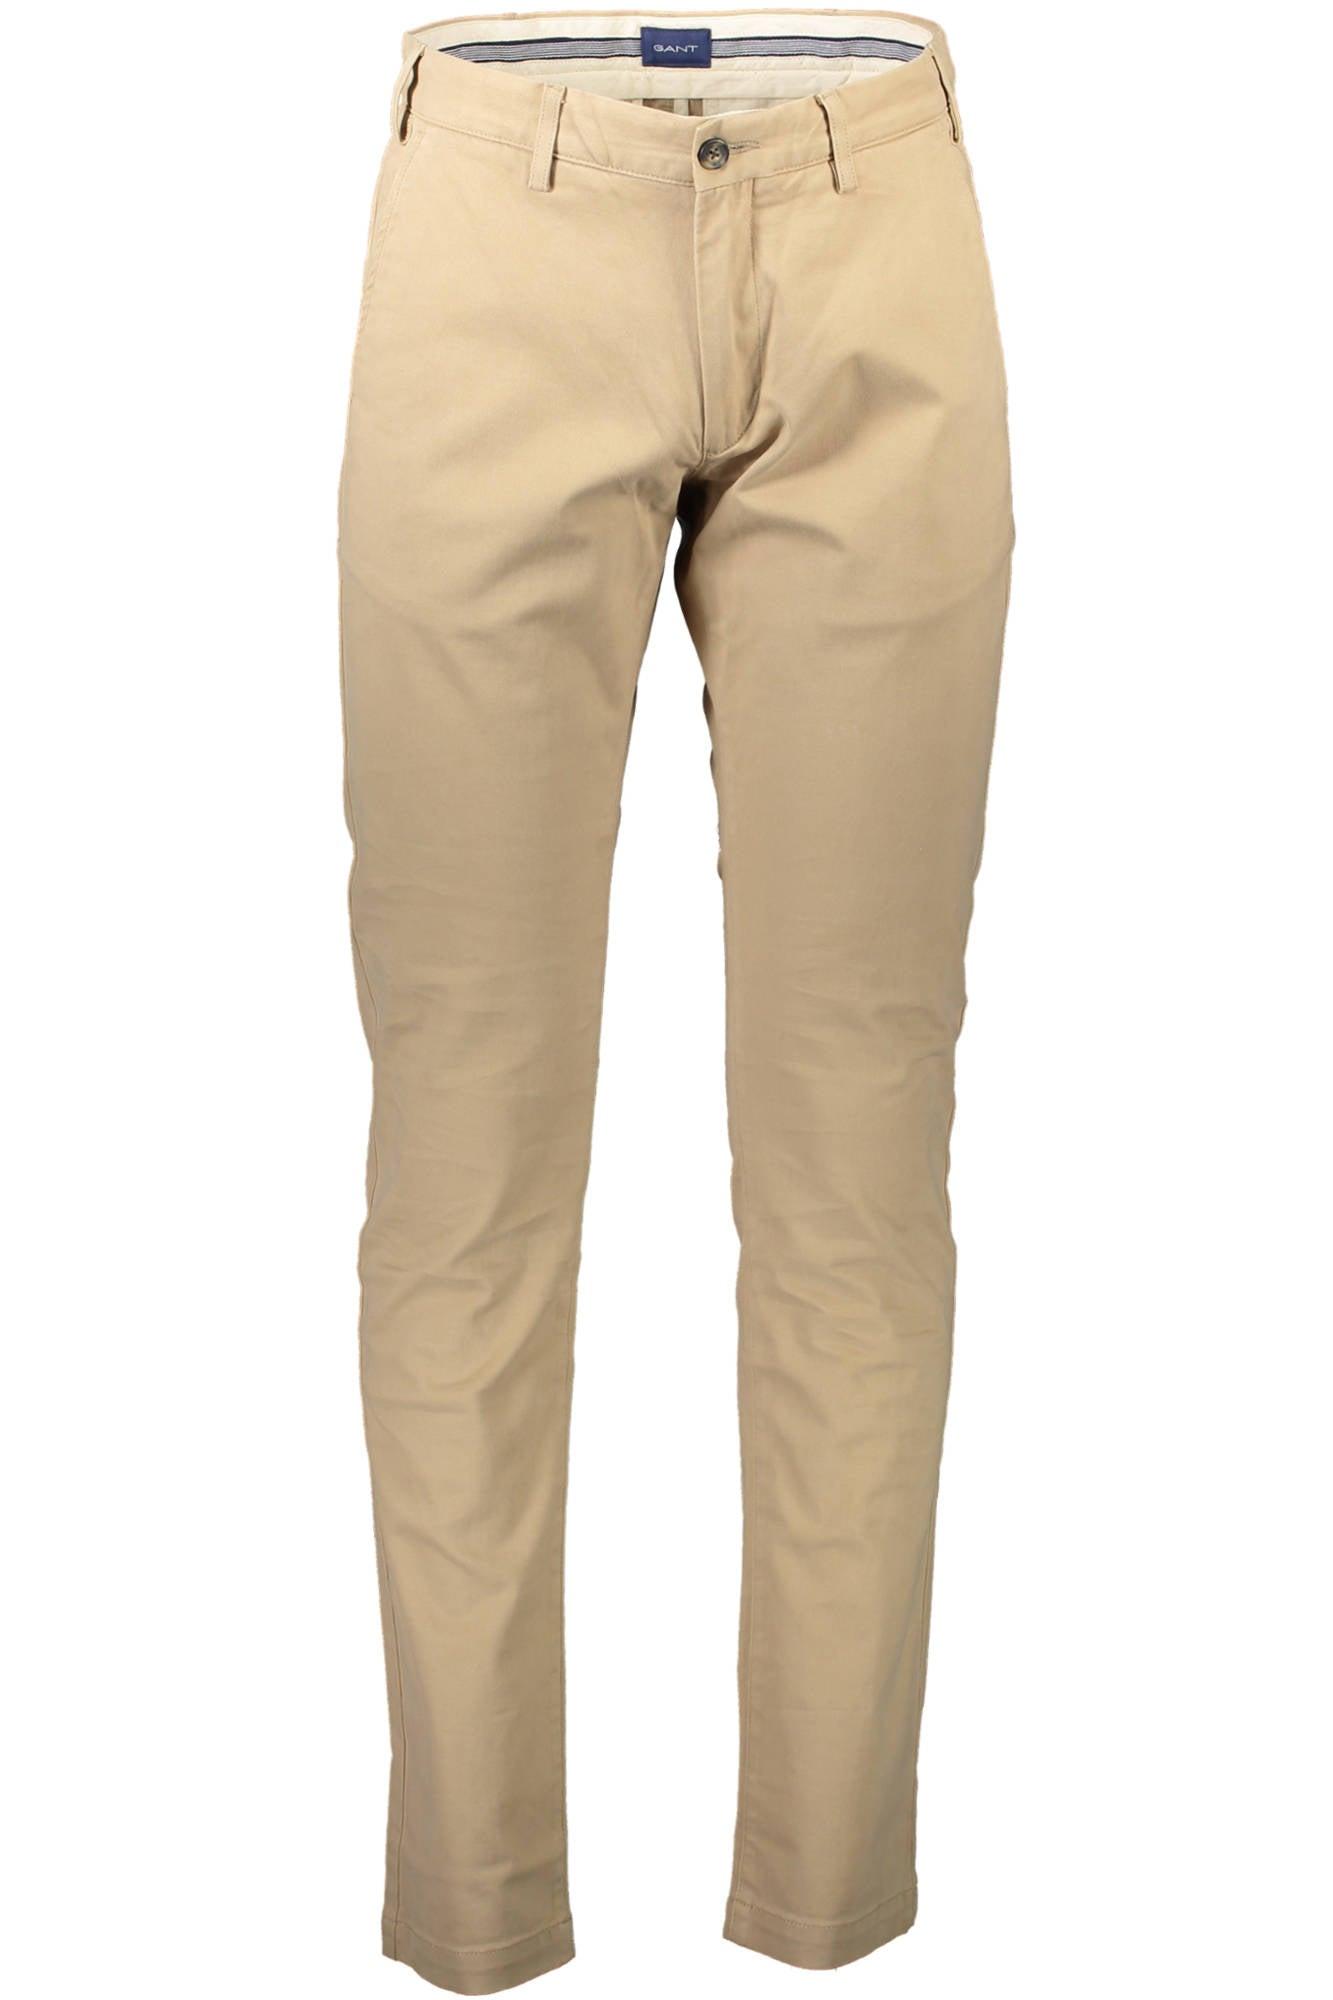 GANT Cotton Jeans & Pant in Natural for Men | Lyst